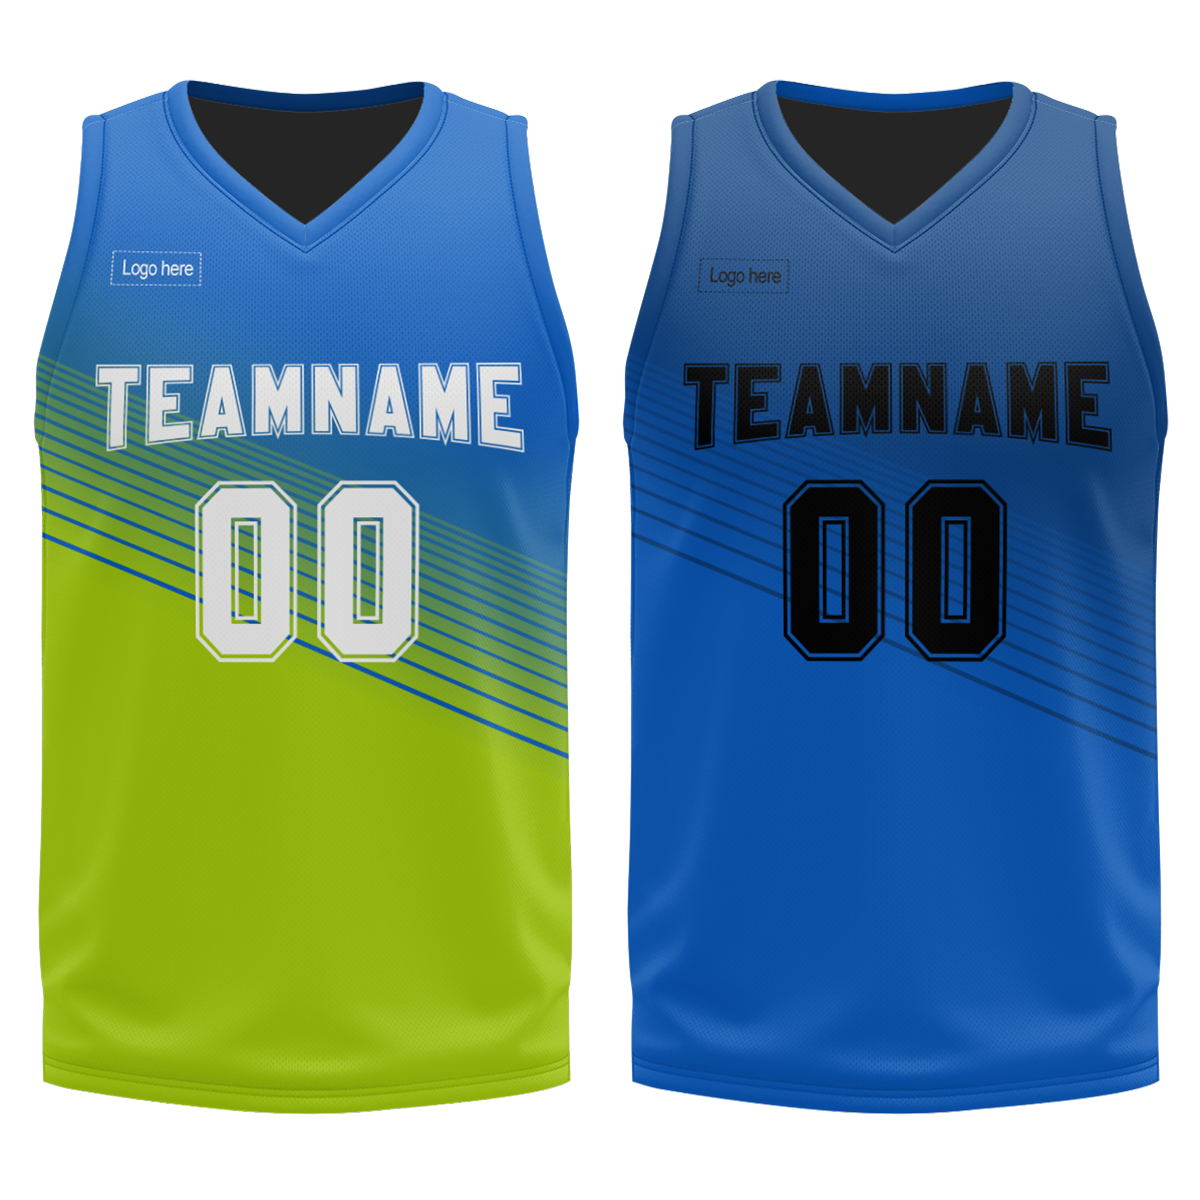 wholesale-mens-basketball-jerseys-custom-printing-on-demand-polyester-reversible-basketball-shirts-at-cj-pod-4